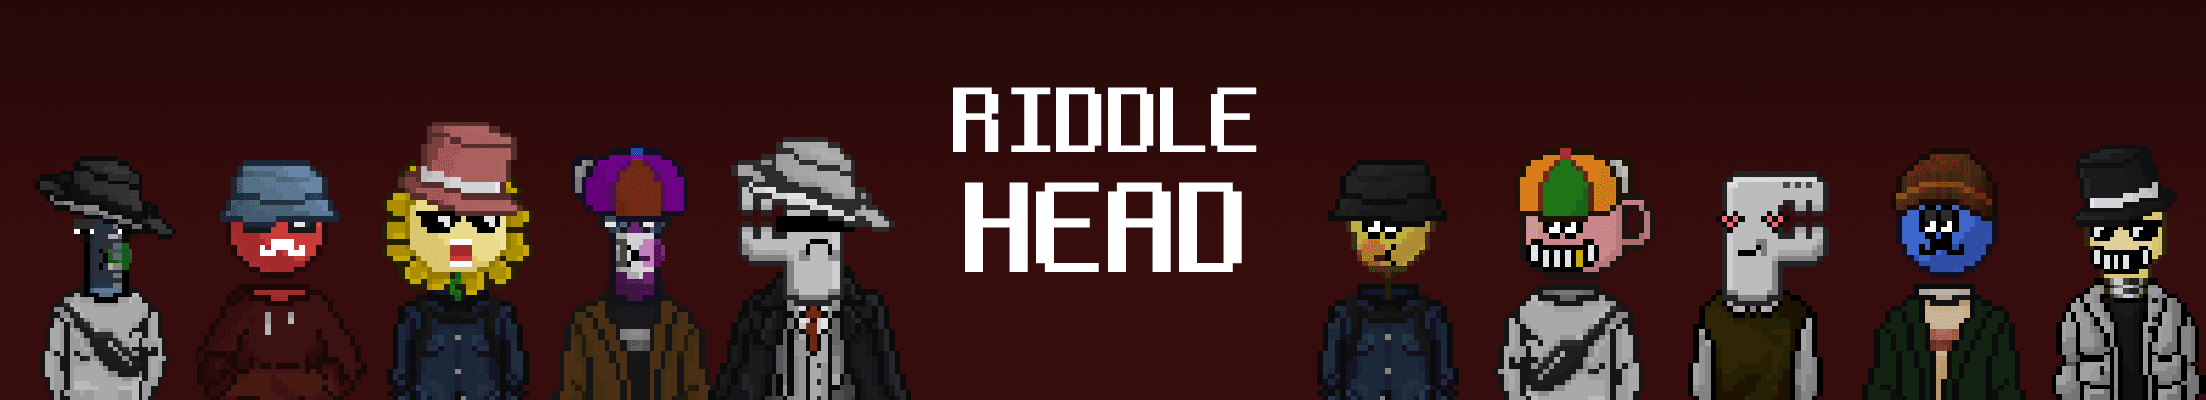 RiddleHead